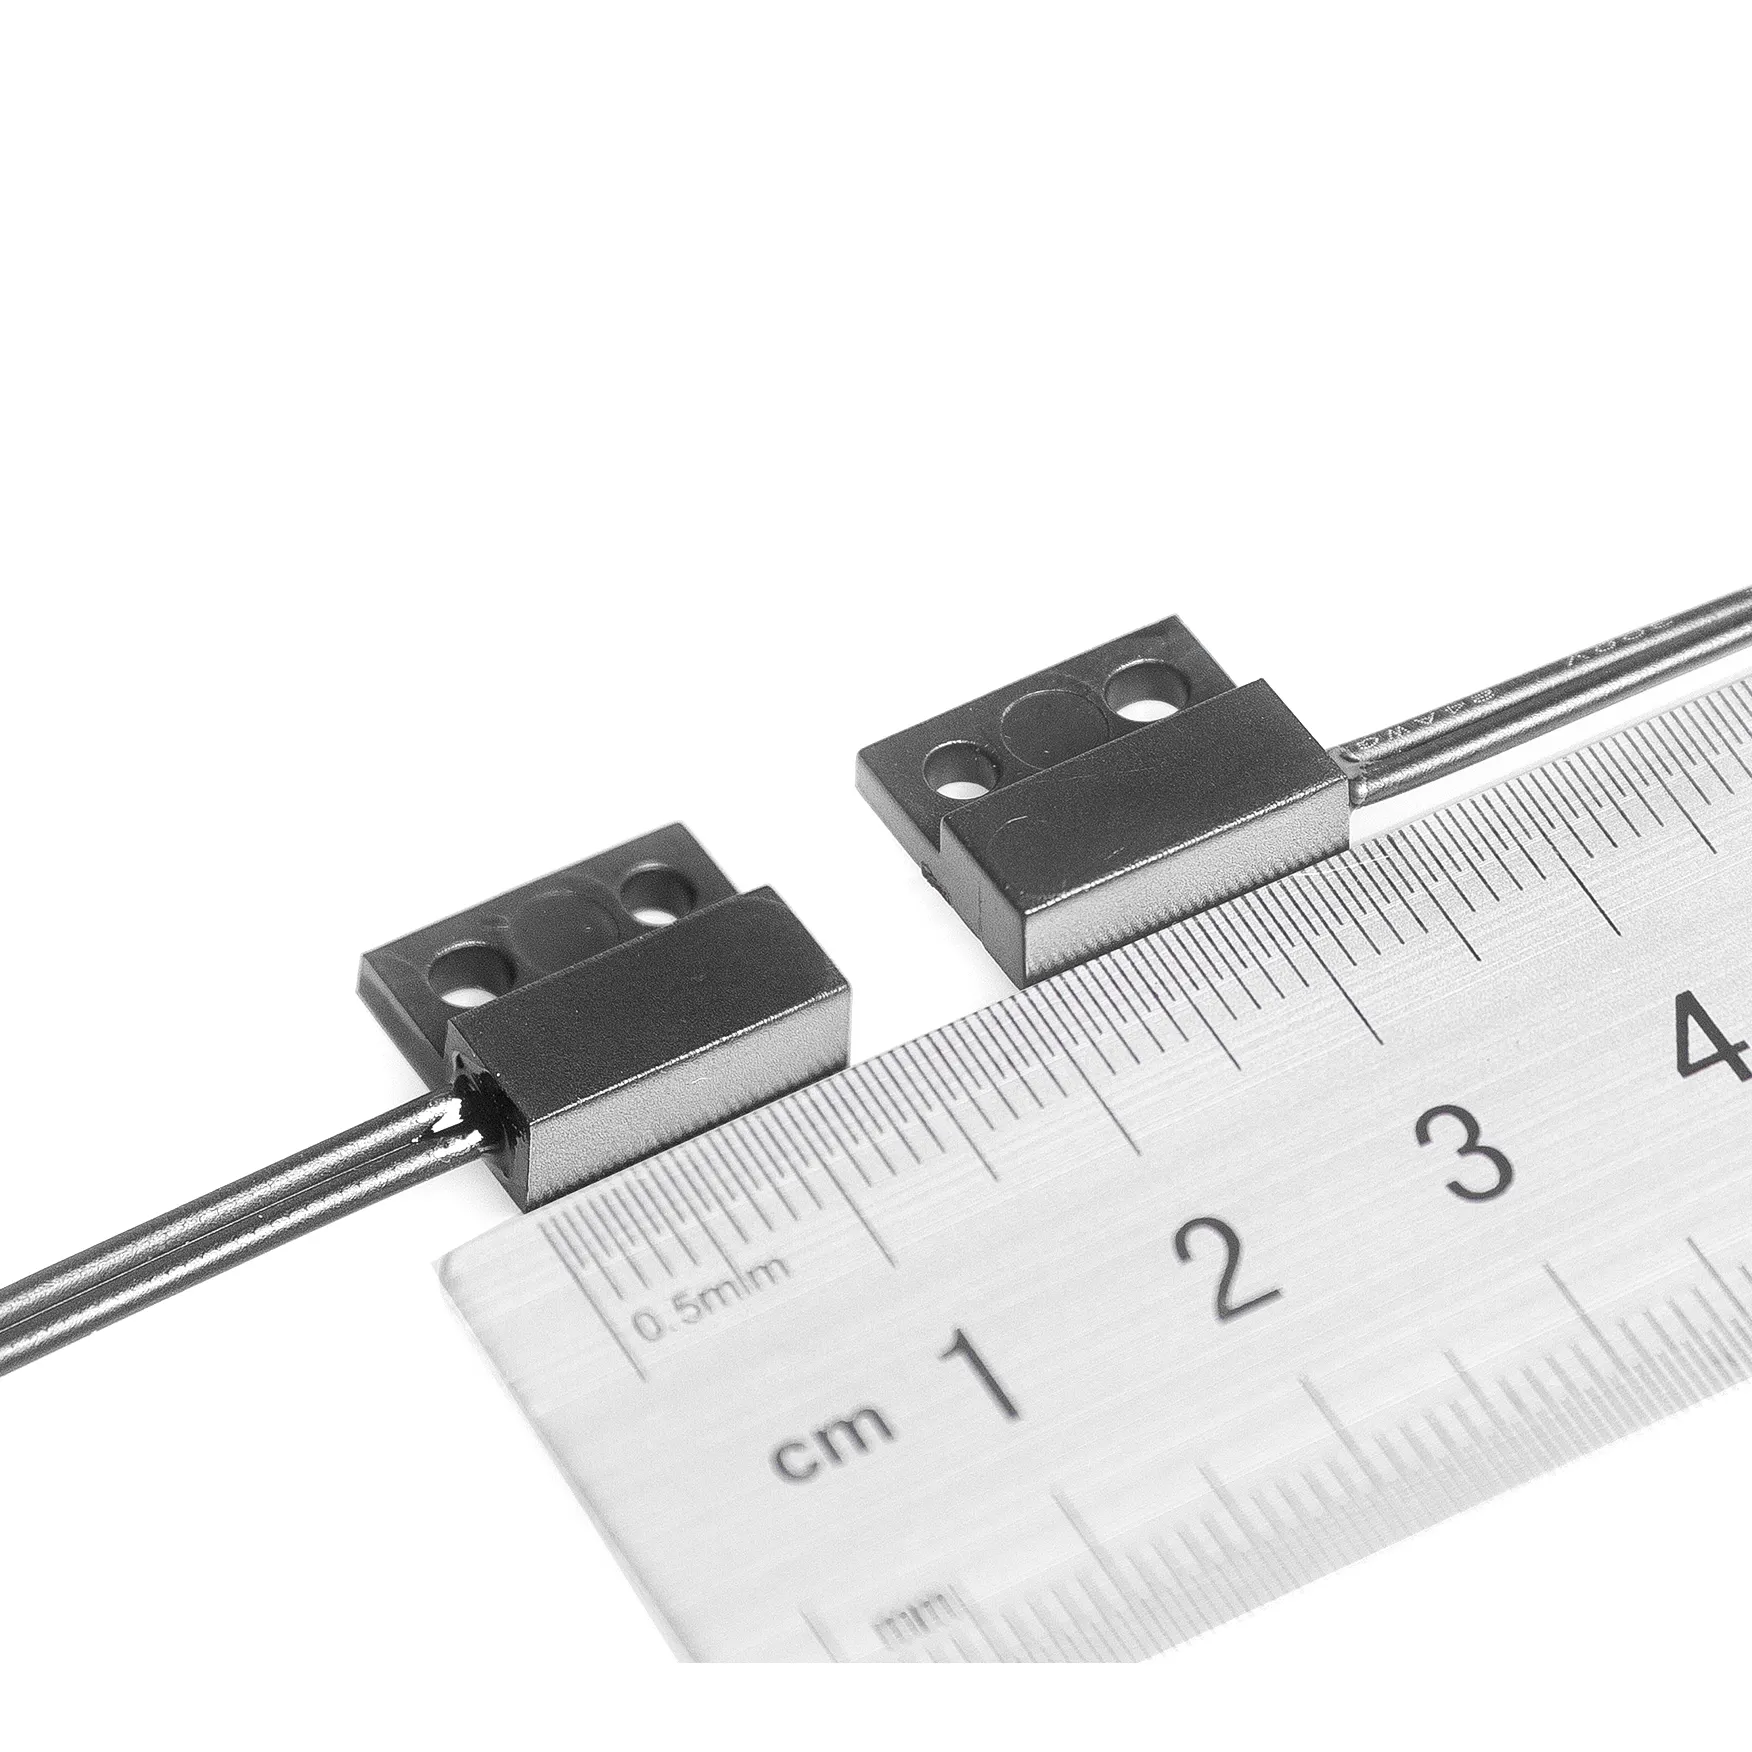 Sensor de interruptor de lengüeta de plástico rectangular, Sin tipo, Sensor de interruptor de proximidad de lengüeta magnética con Cable, de plástico, de 2, 2, 1, 2, 2, 2, 2, 2